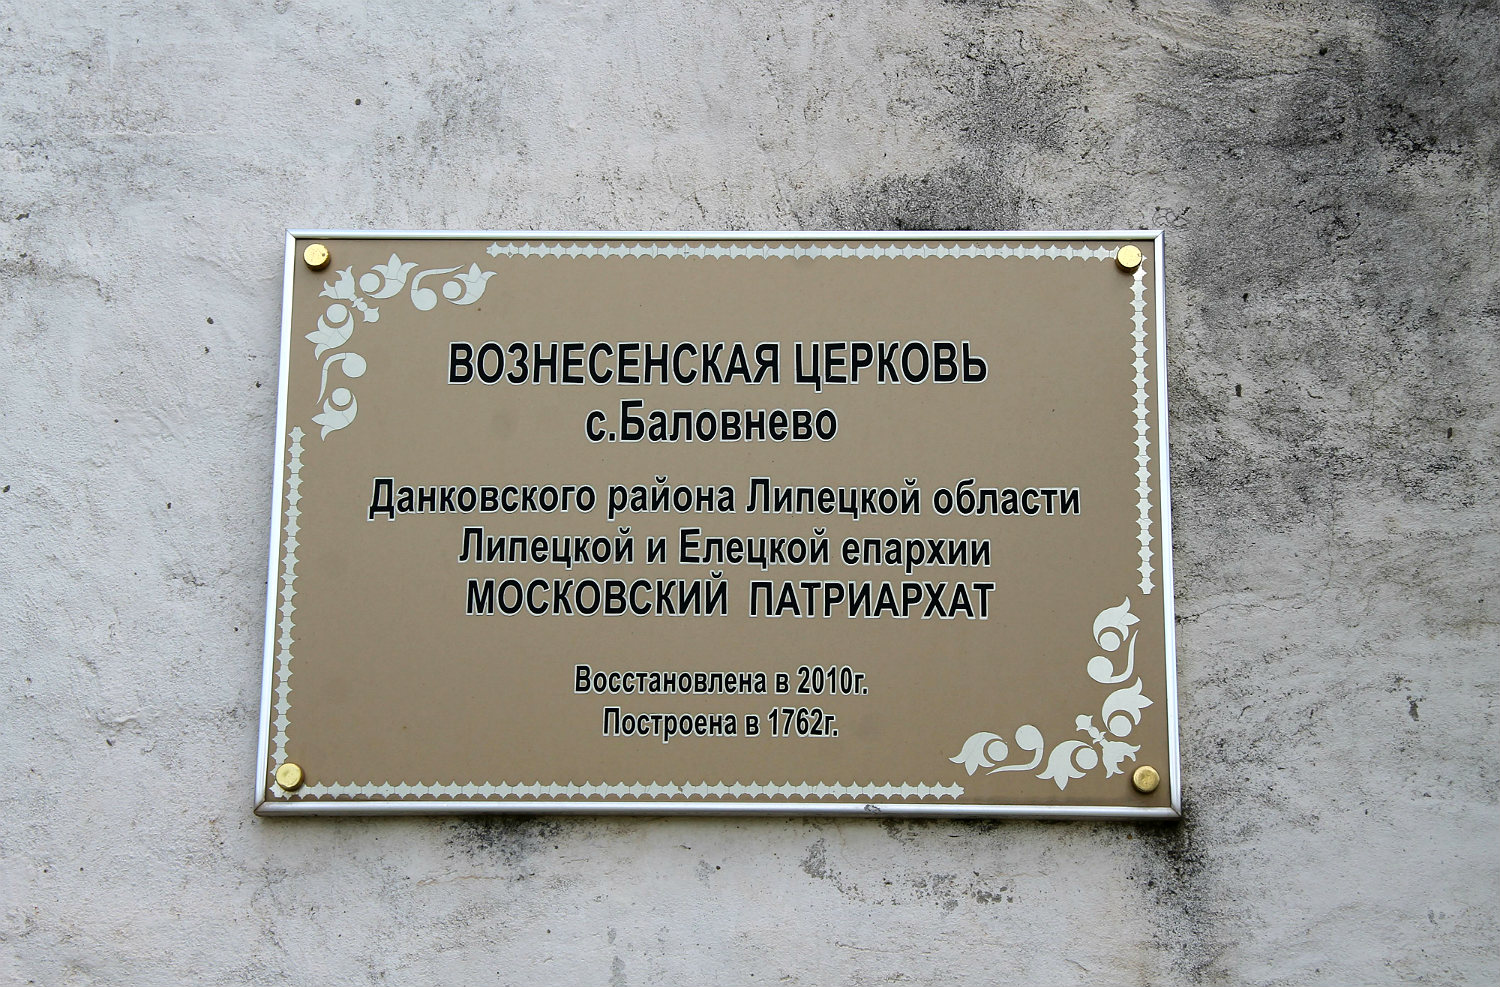 Данковский район, прочие н.п., . Данковский район, прочие н.п. — Memorial plaques